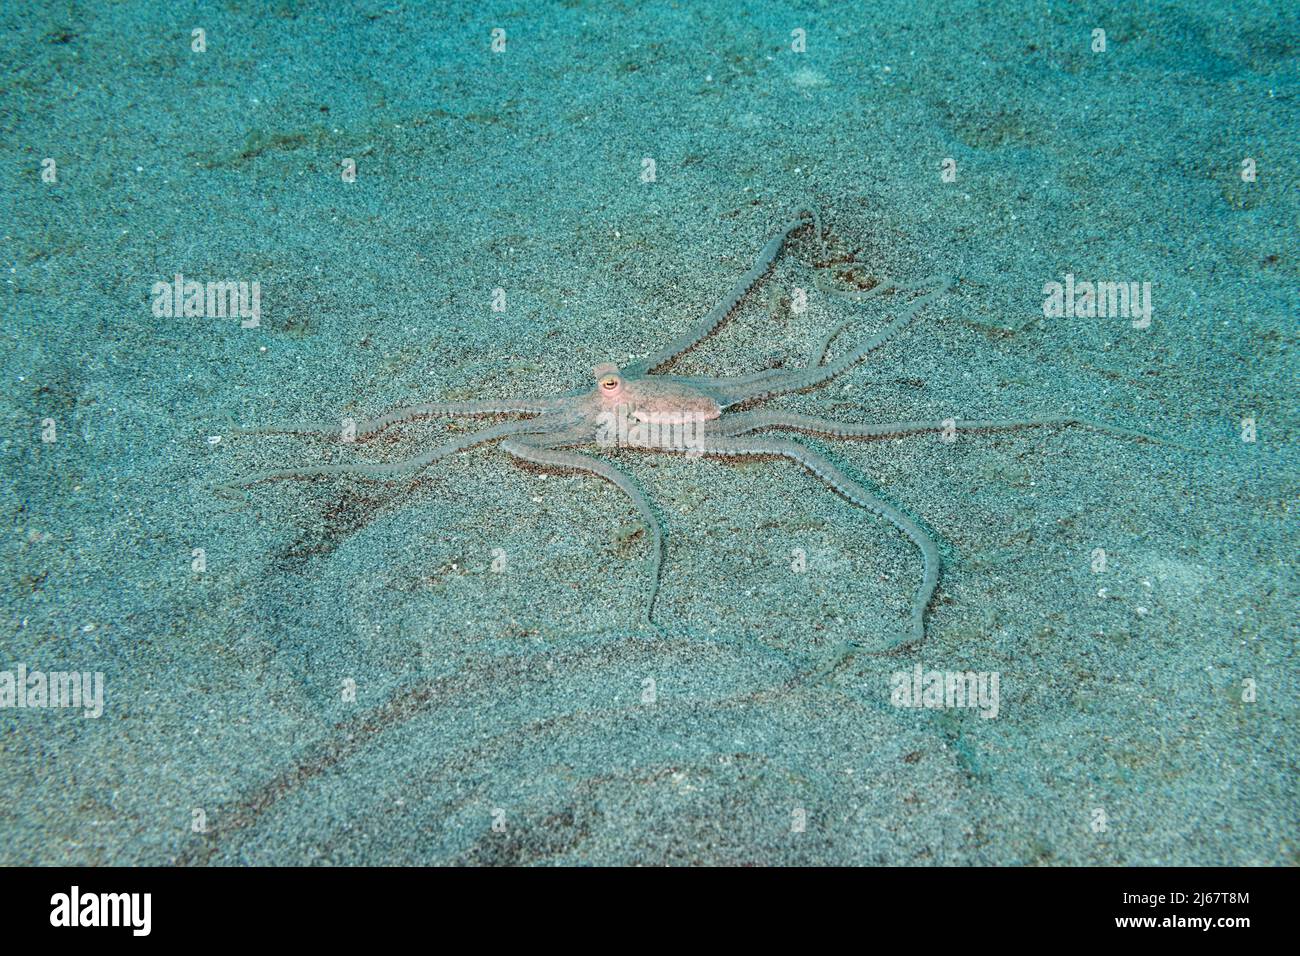 Hawaiian long-armed sand octopus, Thaumoctopus, Abdopus, or Macrotritopus sp., likely an undescribed, endemic species; Ho'okena, South Kona, Hawaii US Stock Photo